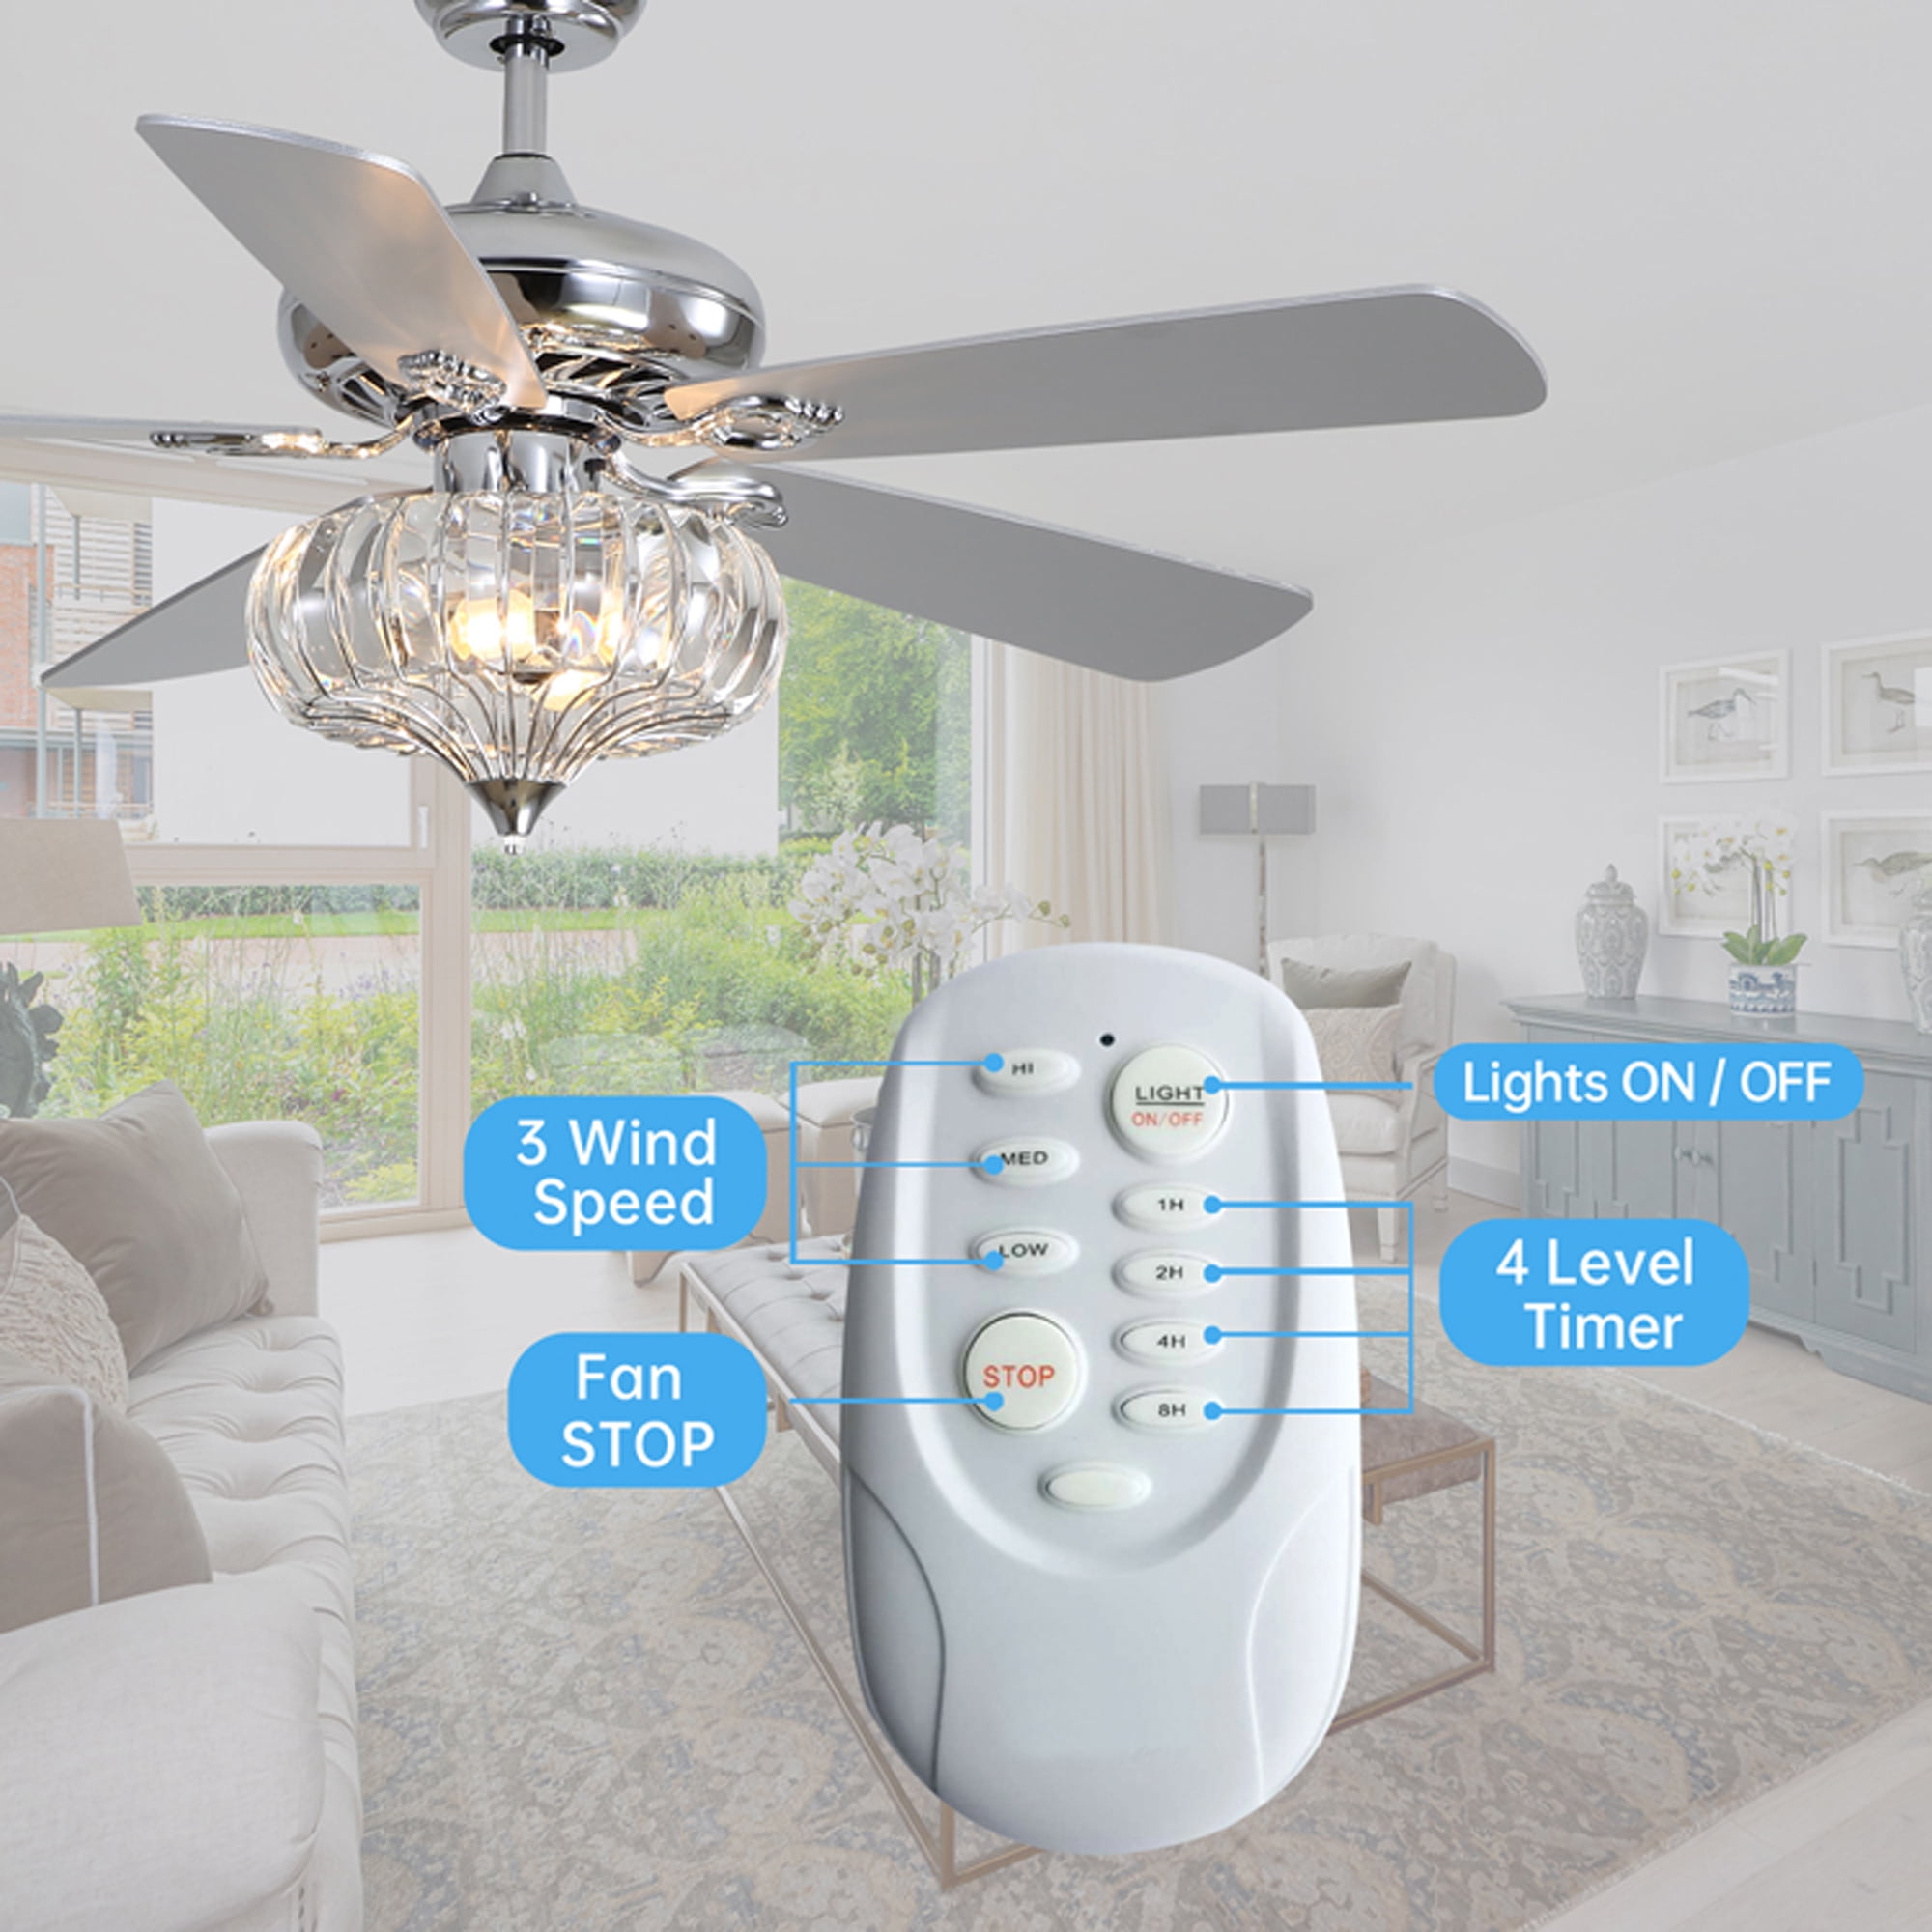 Details about   52" Retro Crystal Ceiling Fan Light Remote Control Chandelier Fan Reversible LED 